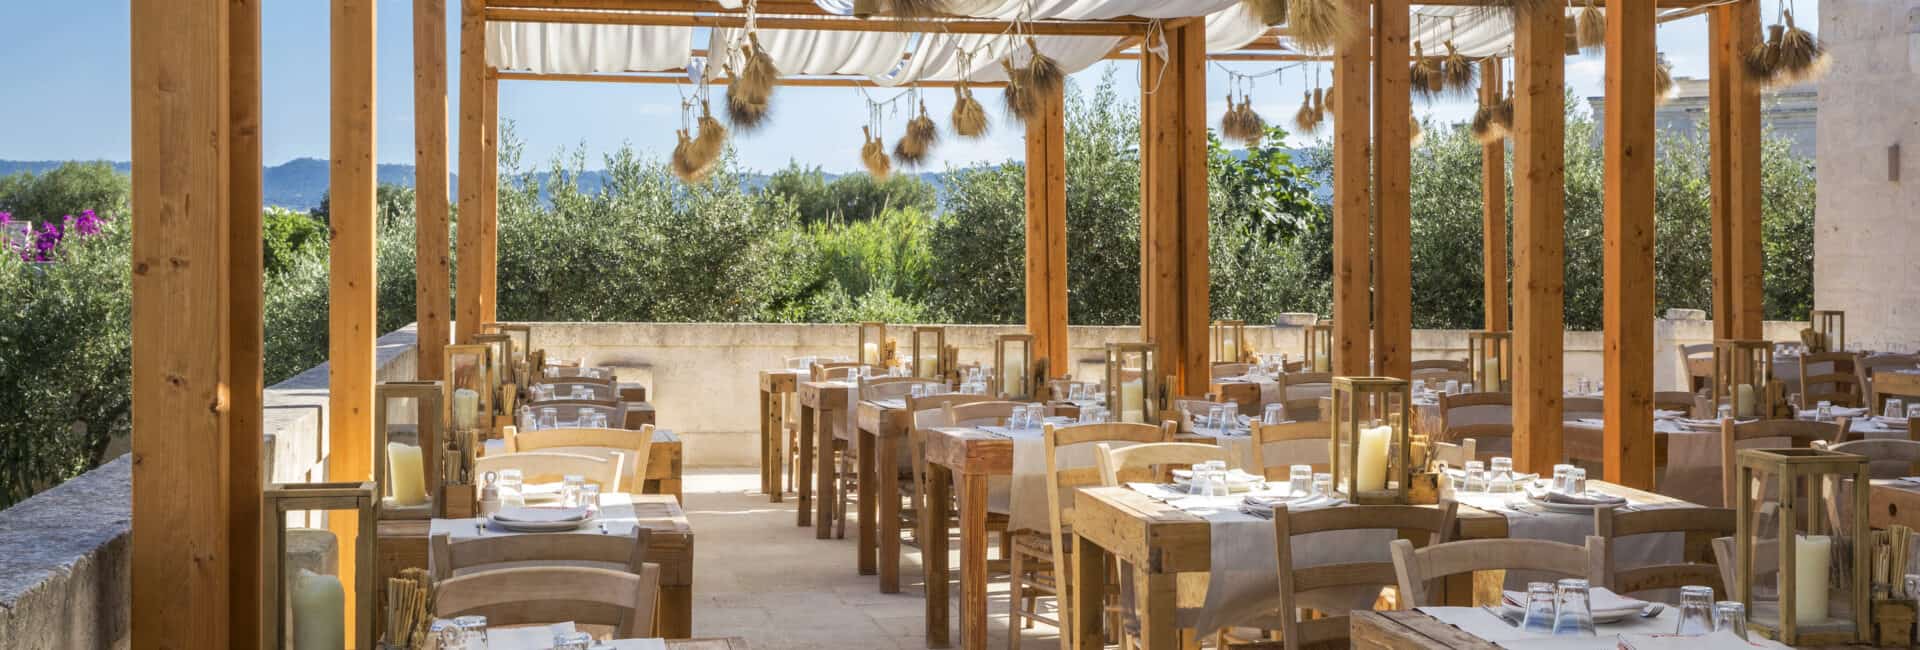 Borgo Egnazia - La Frasca_restaurant